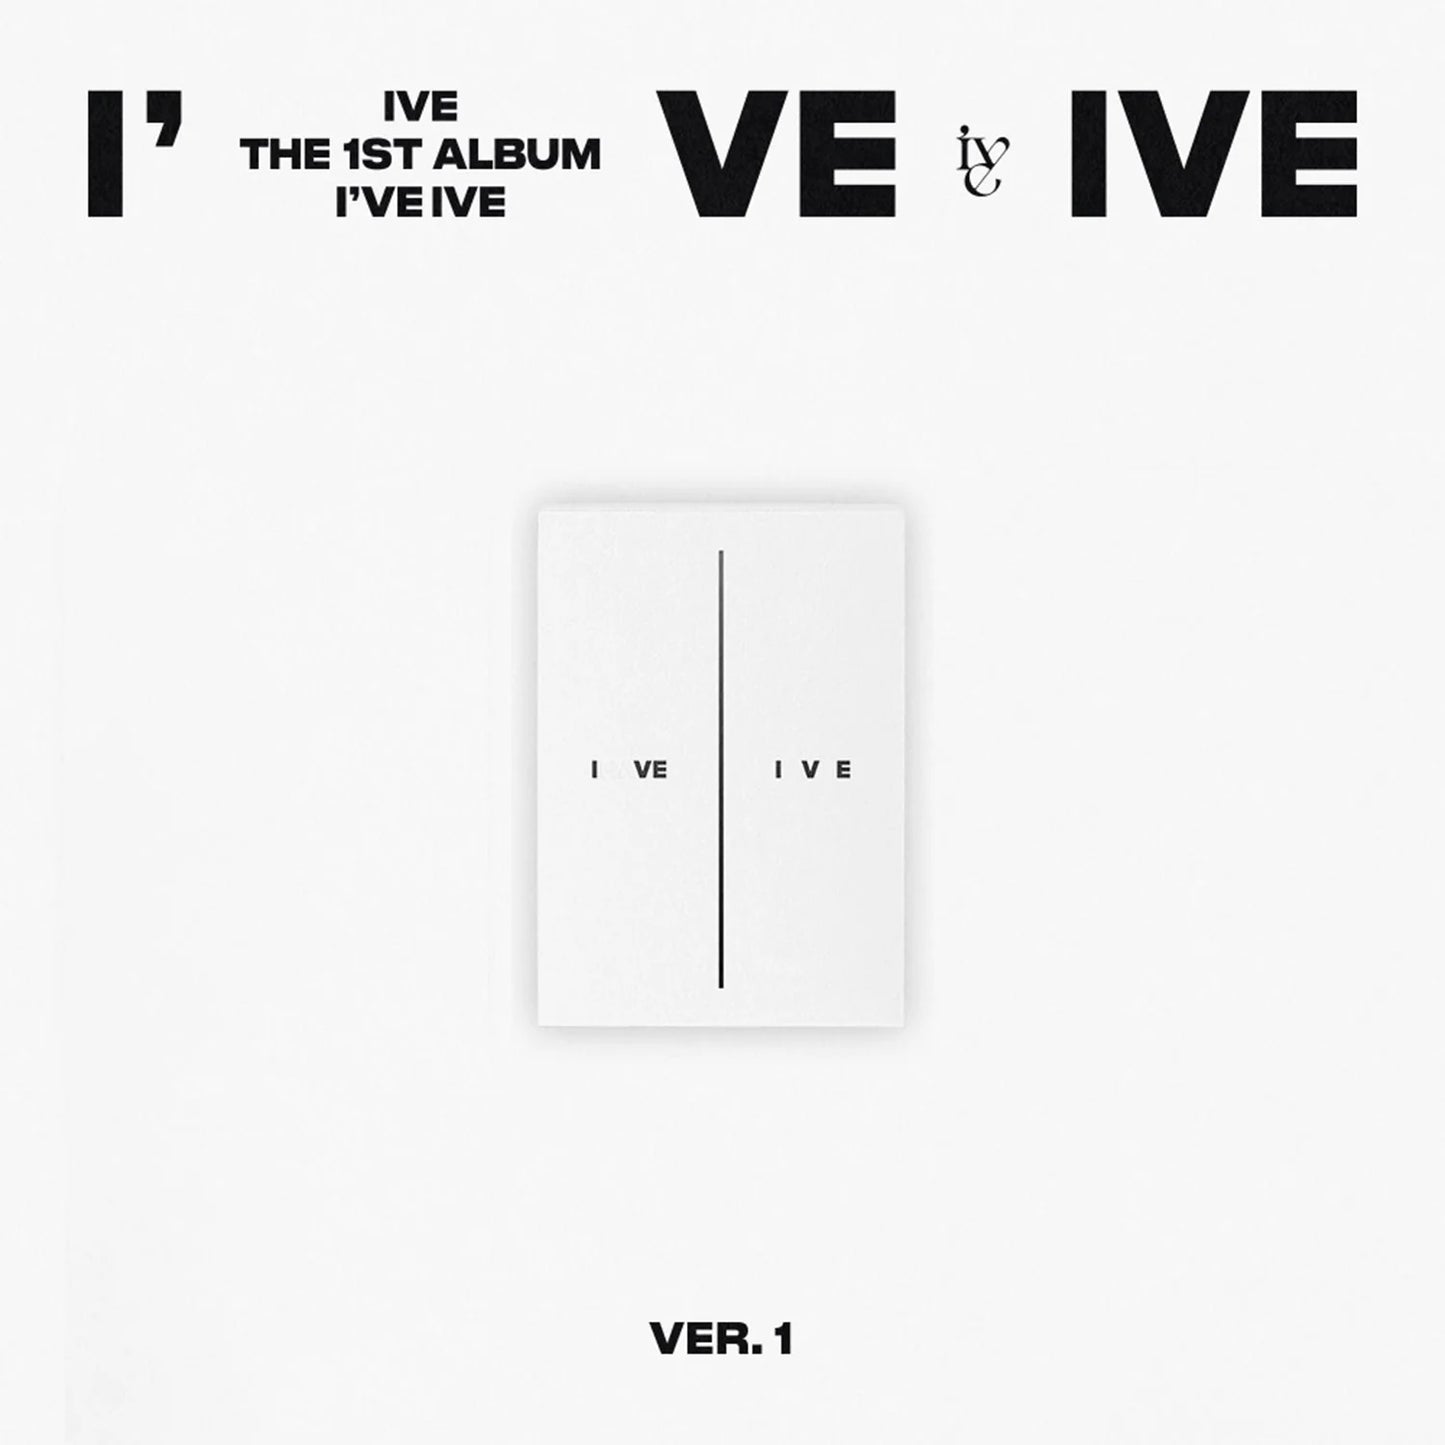 IVE - 1st Full Album 'I'VE IVE'